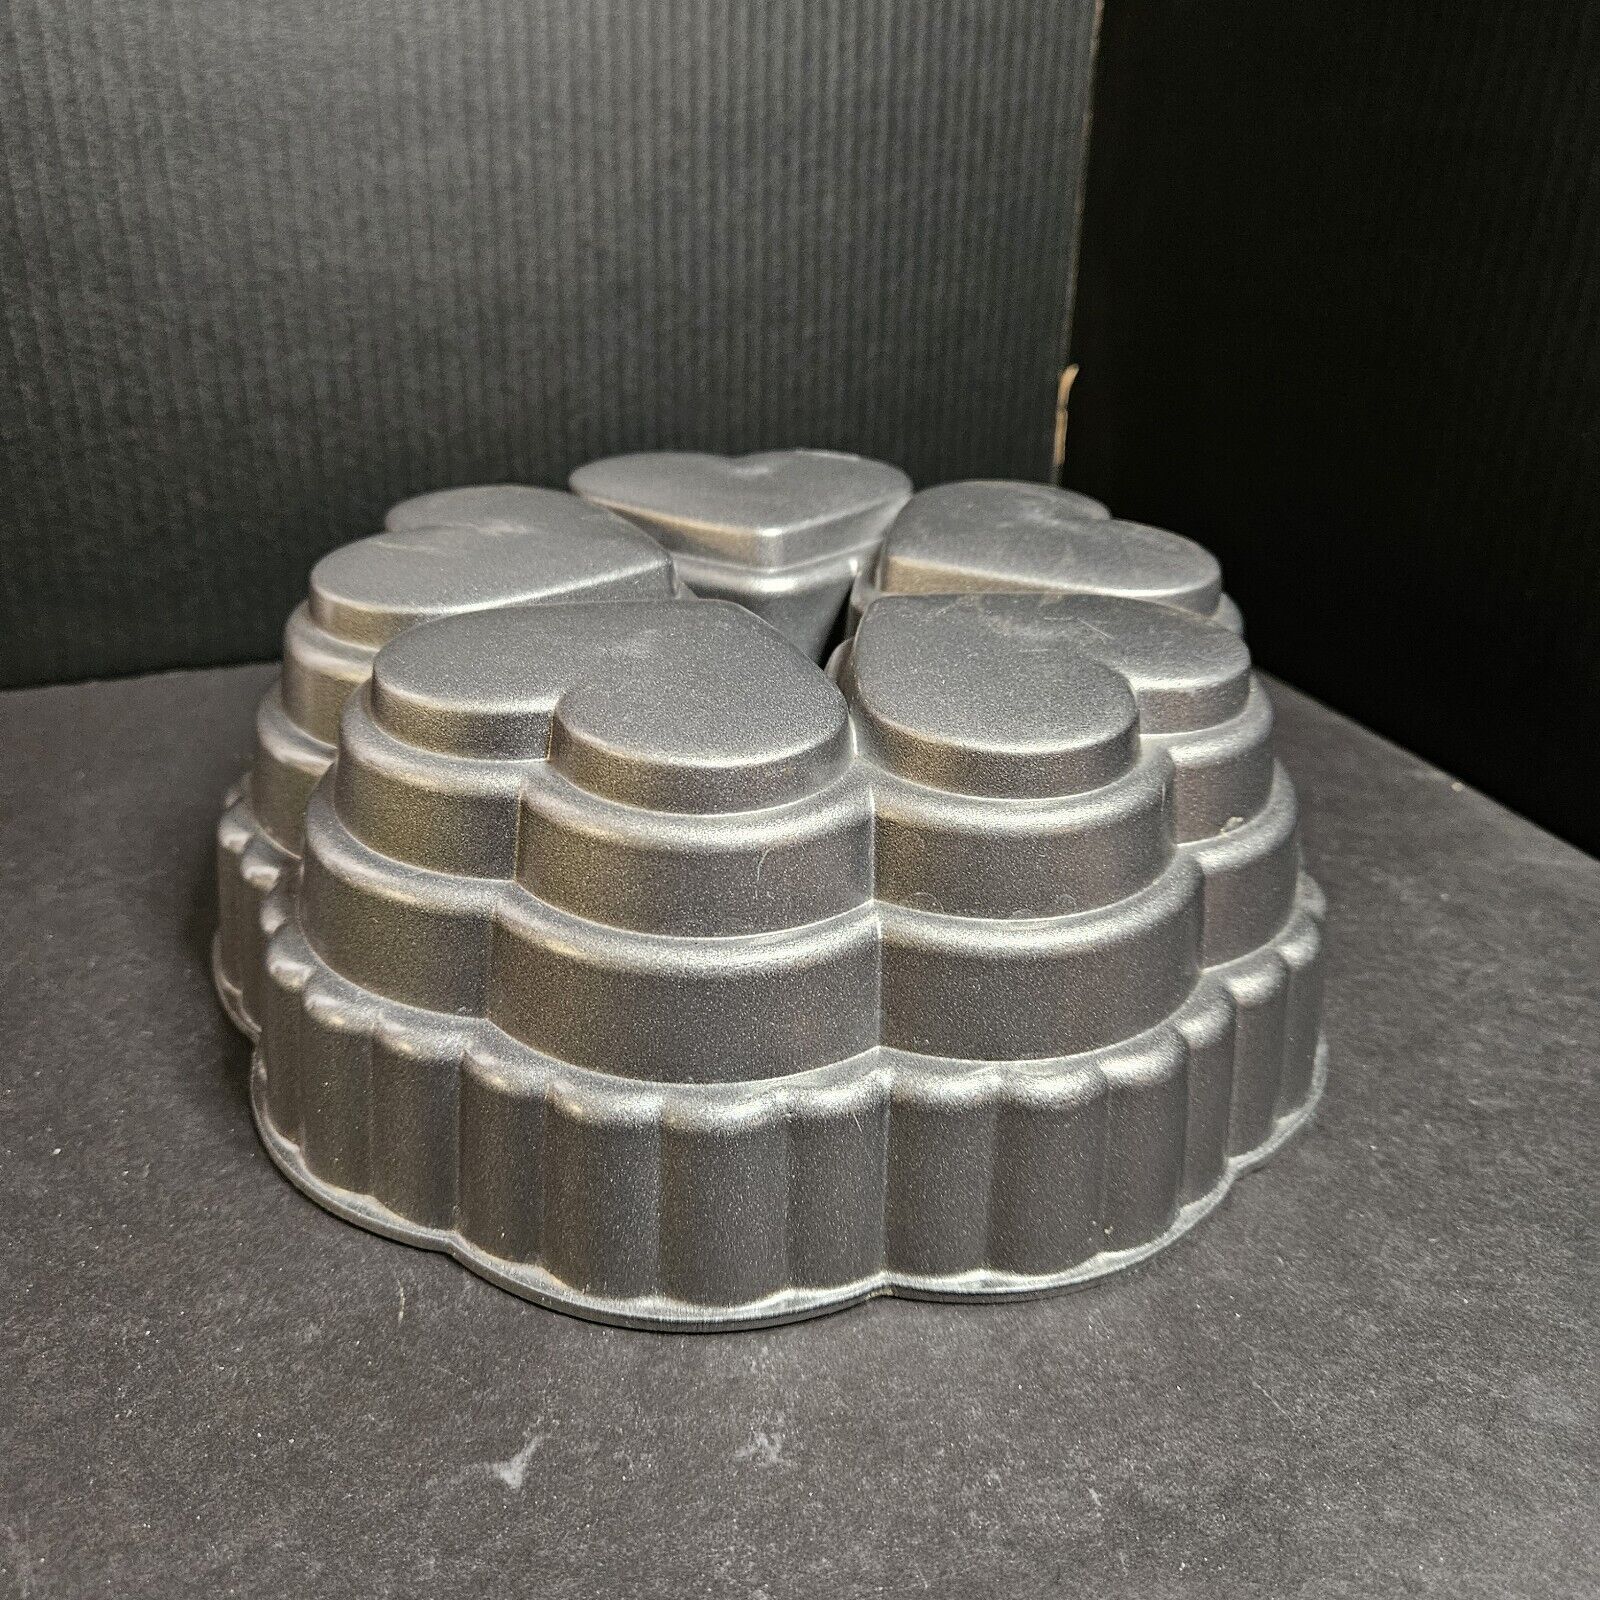 Wilton Dimensions Queen of Hearts Bundt Cake Pan Cast Aluminum 10 Cup Non Stick